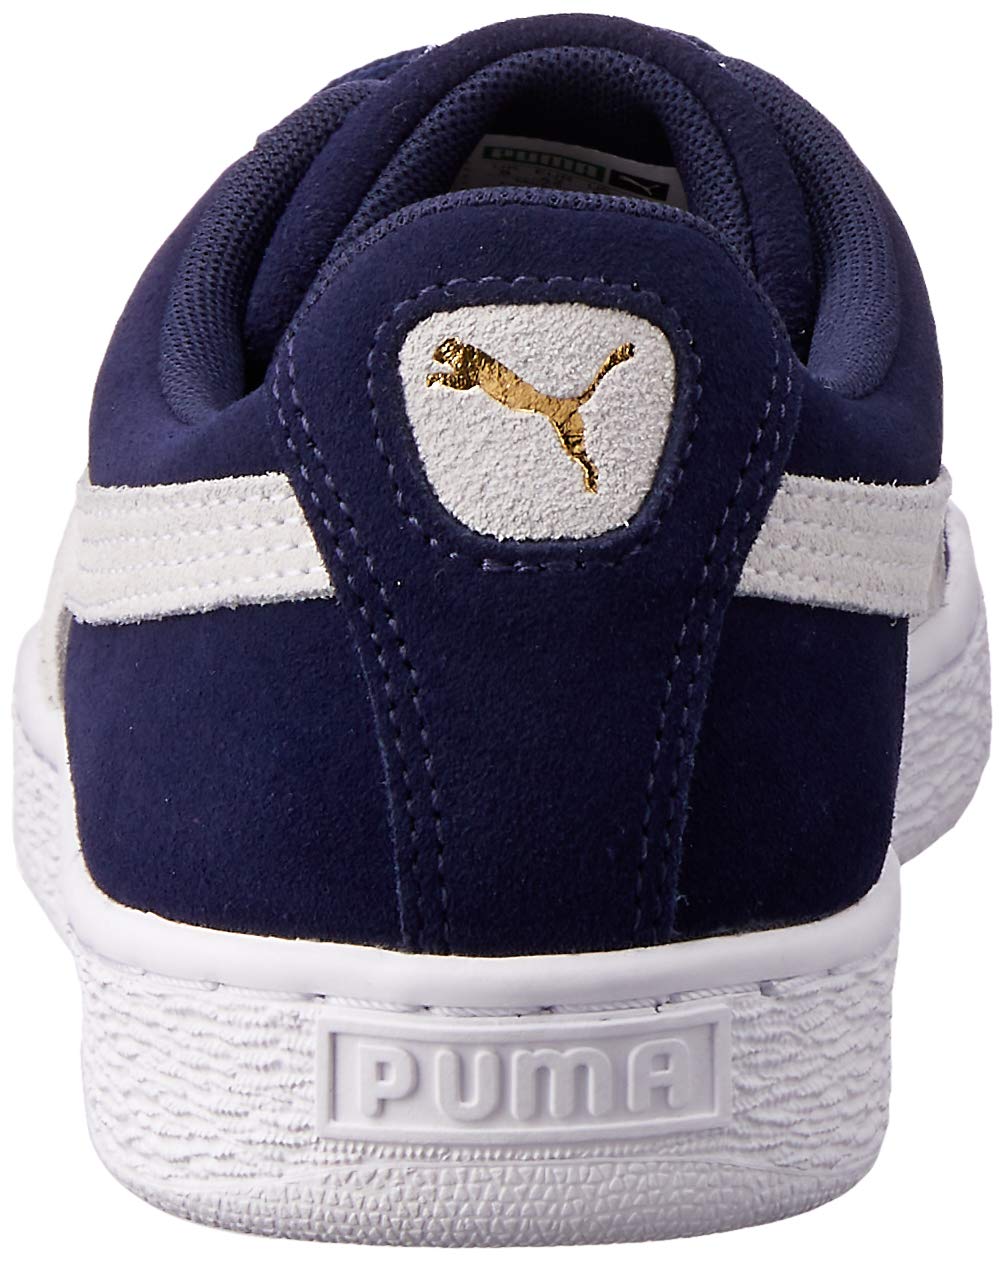 PUMA Select Men's Suede Classic Plus Sneakers